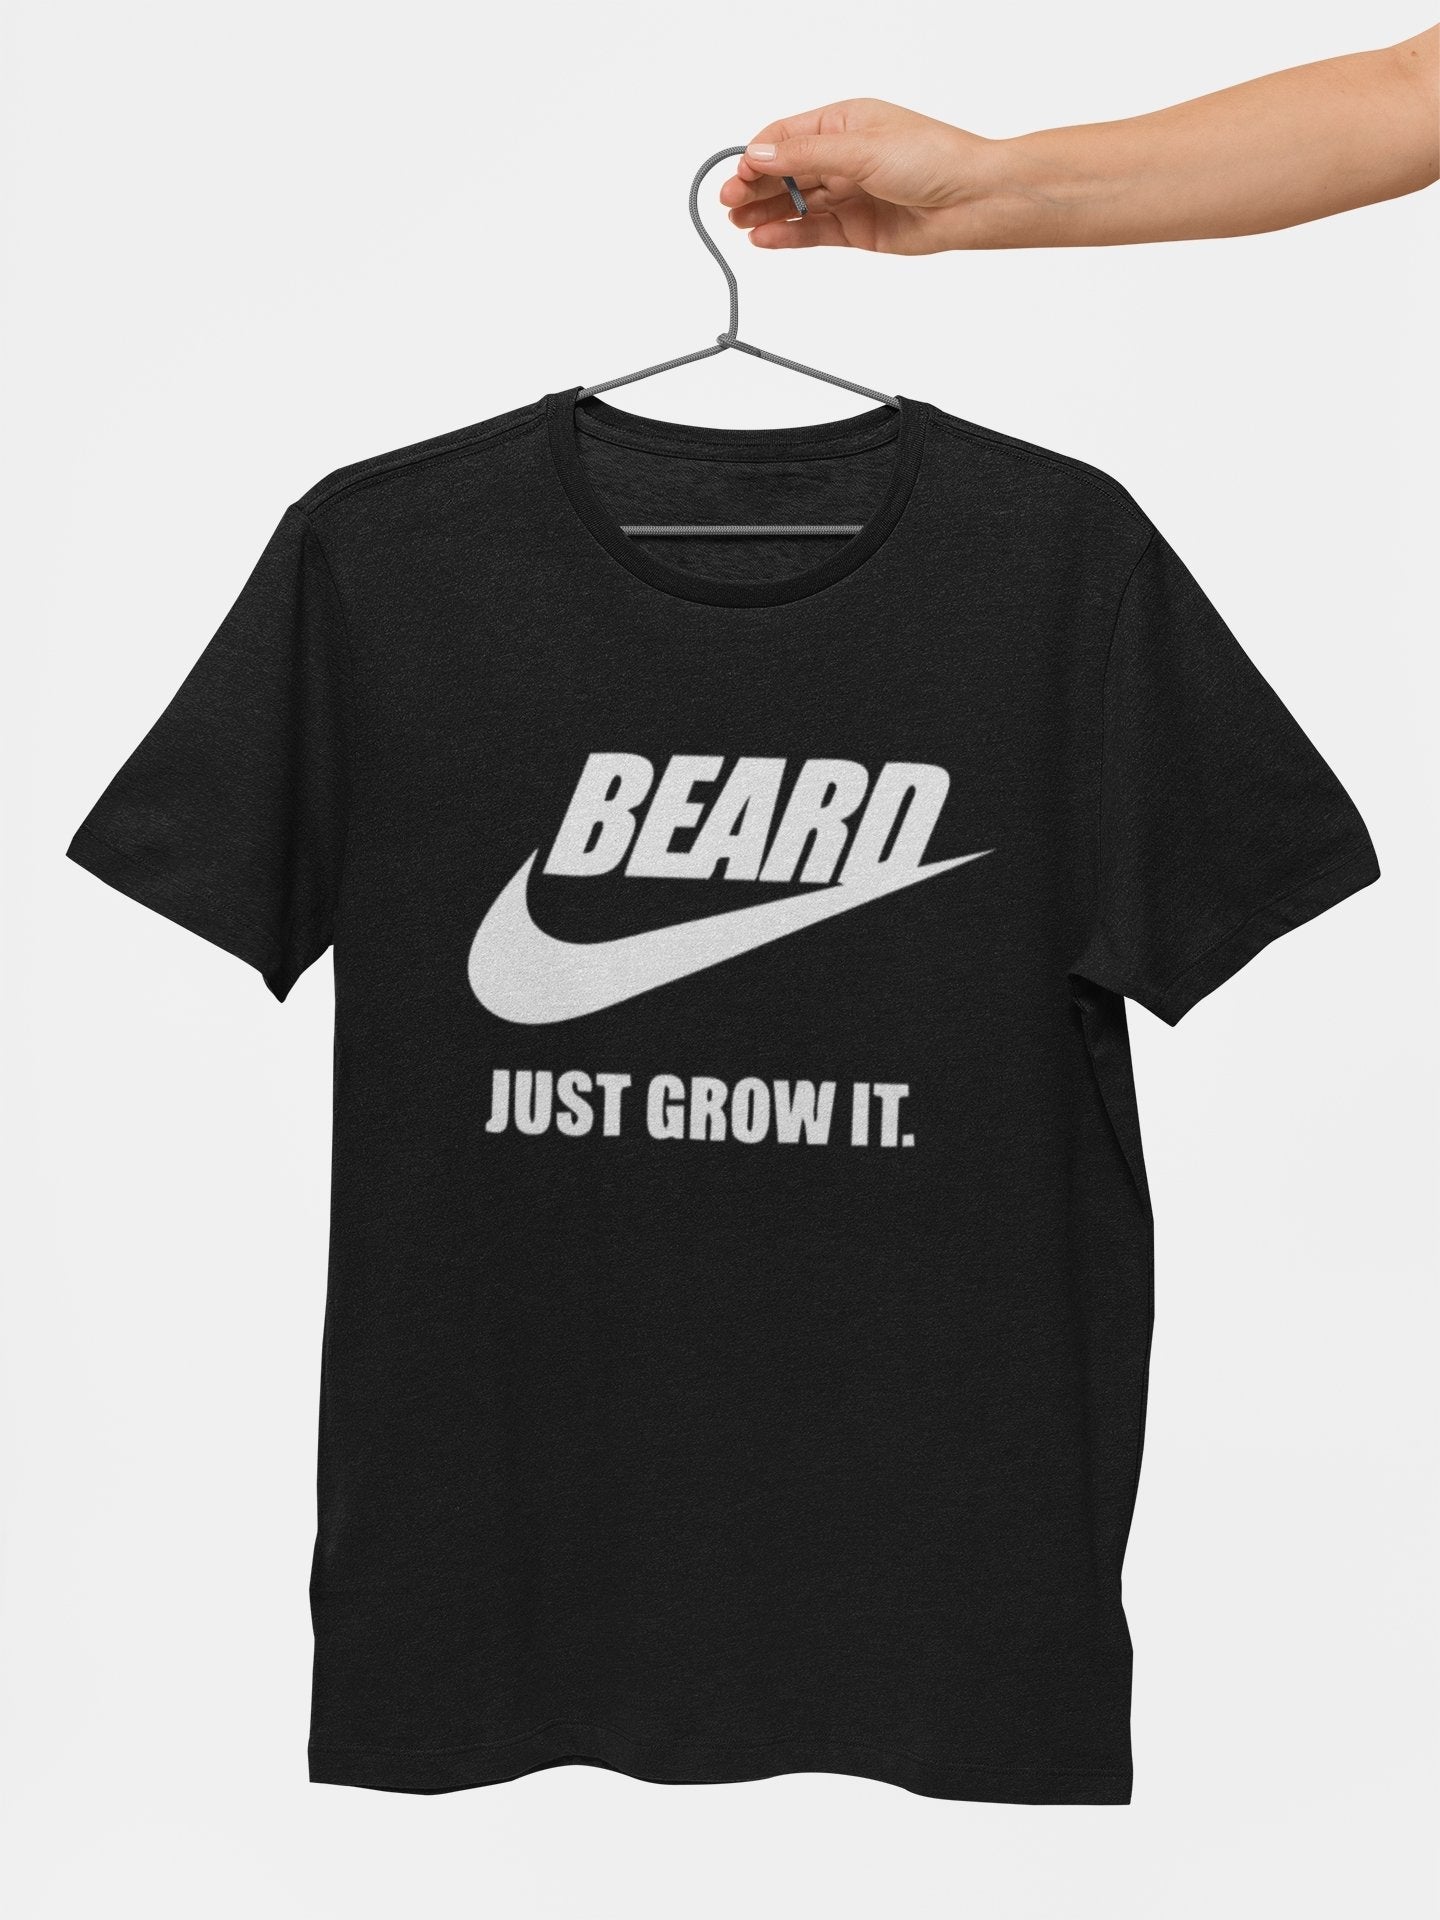 thelegalgang,Beard Just Grow It T Shirt for Bearded Men,MEN.